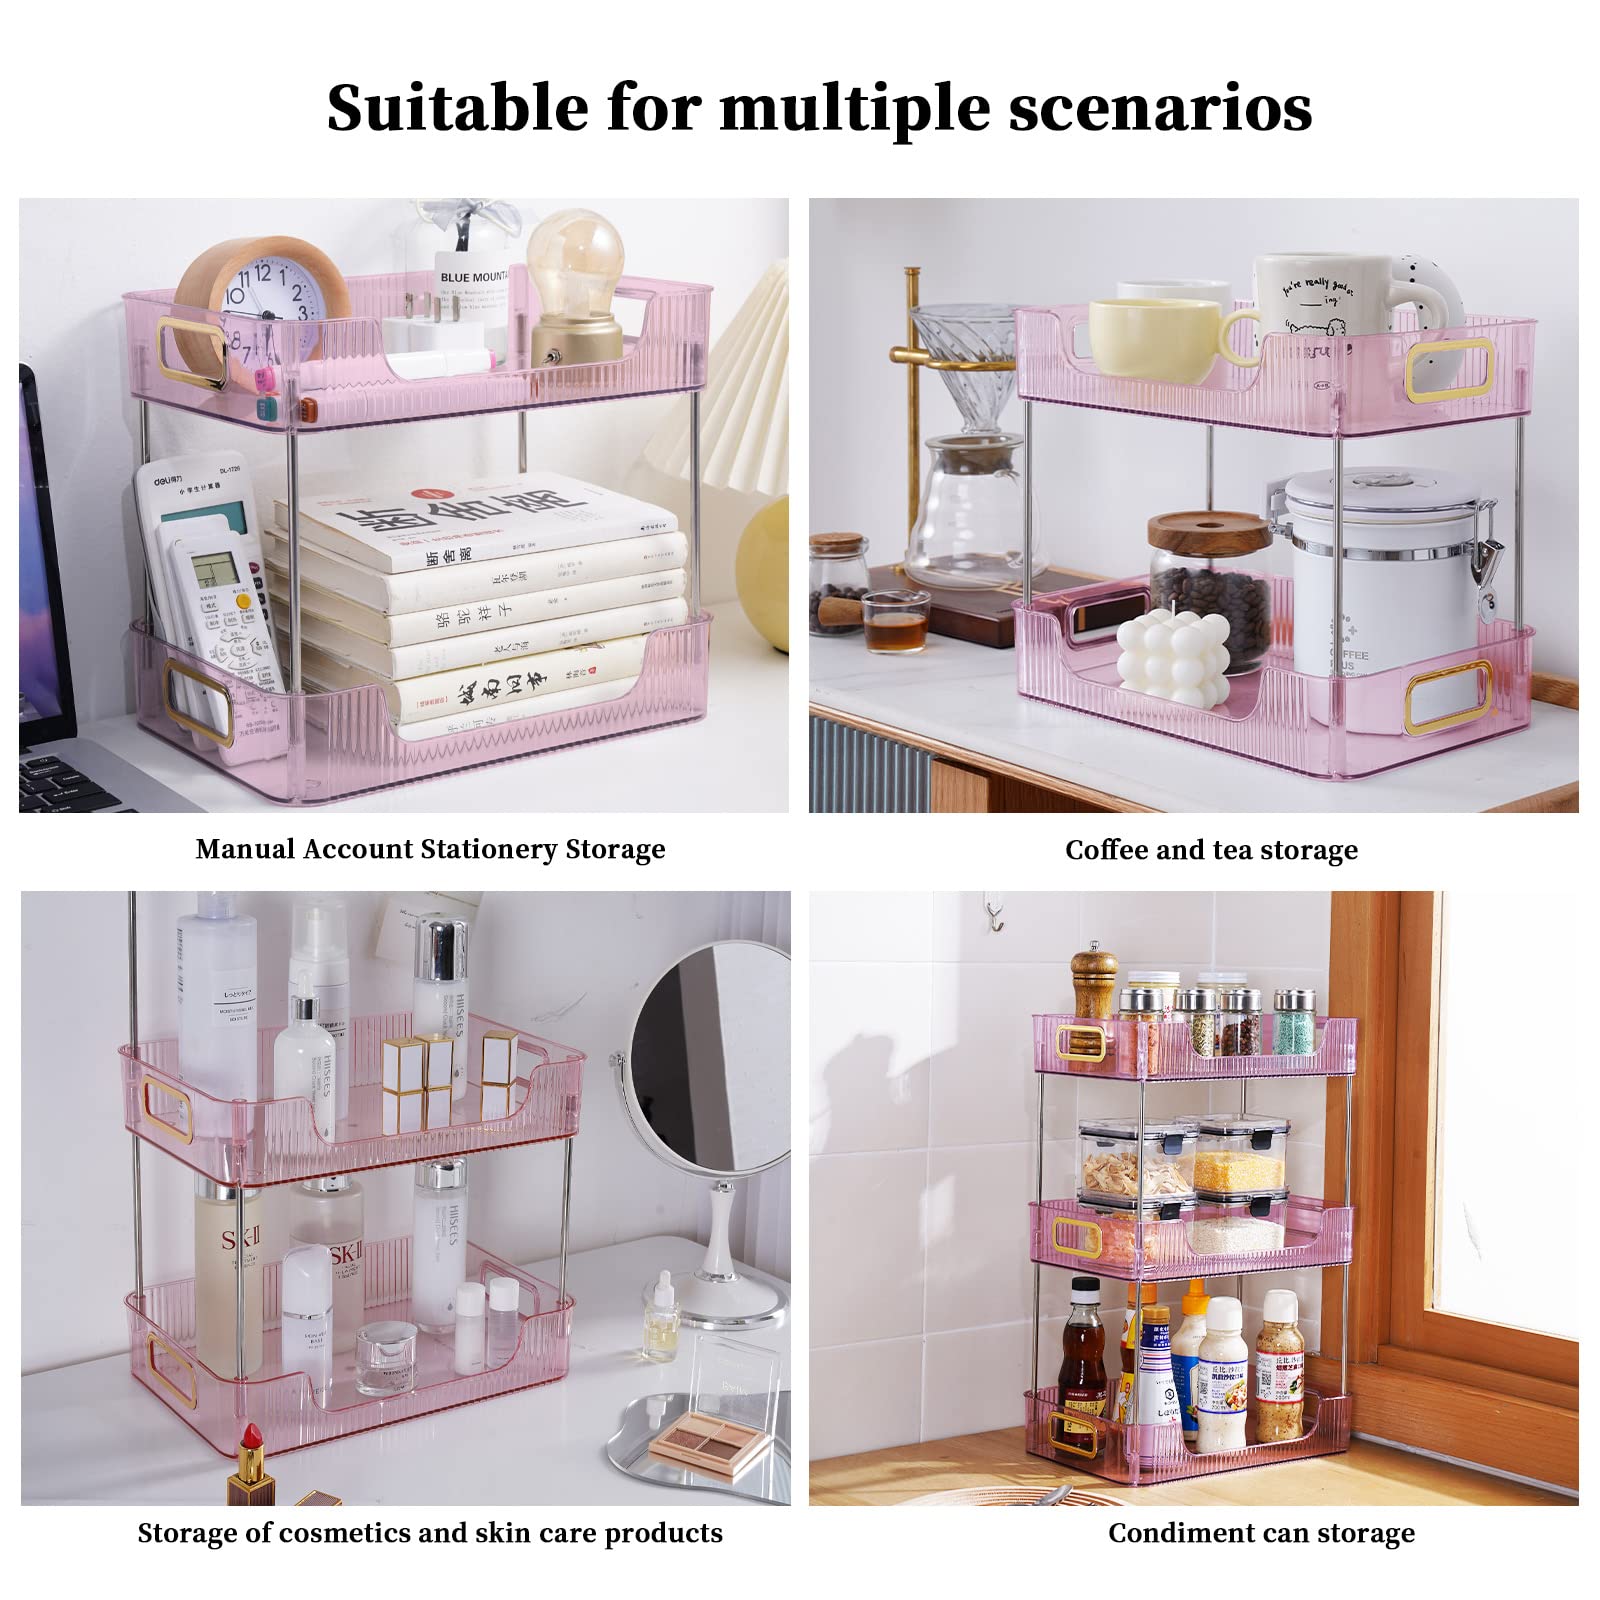 KSDSOAM 3 Tiers Bathroom Countertop Organizer, Cosmetics Skincare Organizer Holder for Perfume, Bathroom Organizers and Storage for Dresser Vanity Tray Sink (Pink)